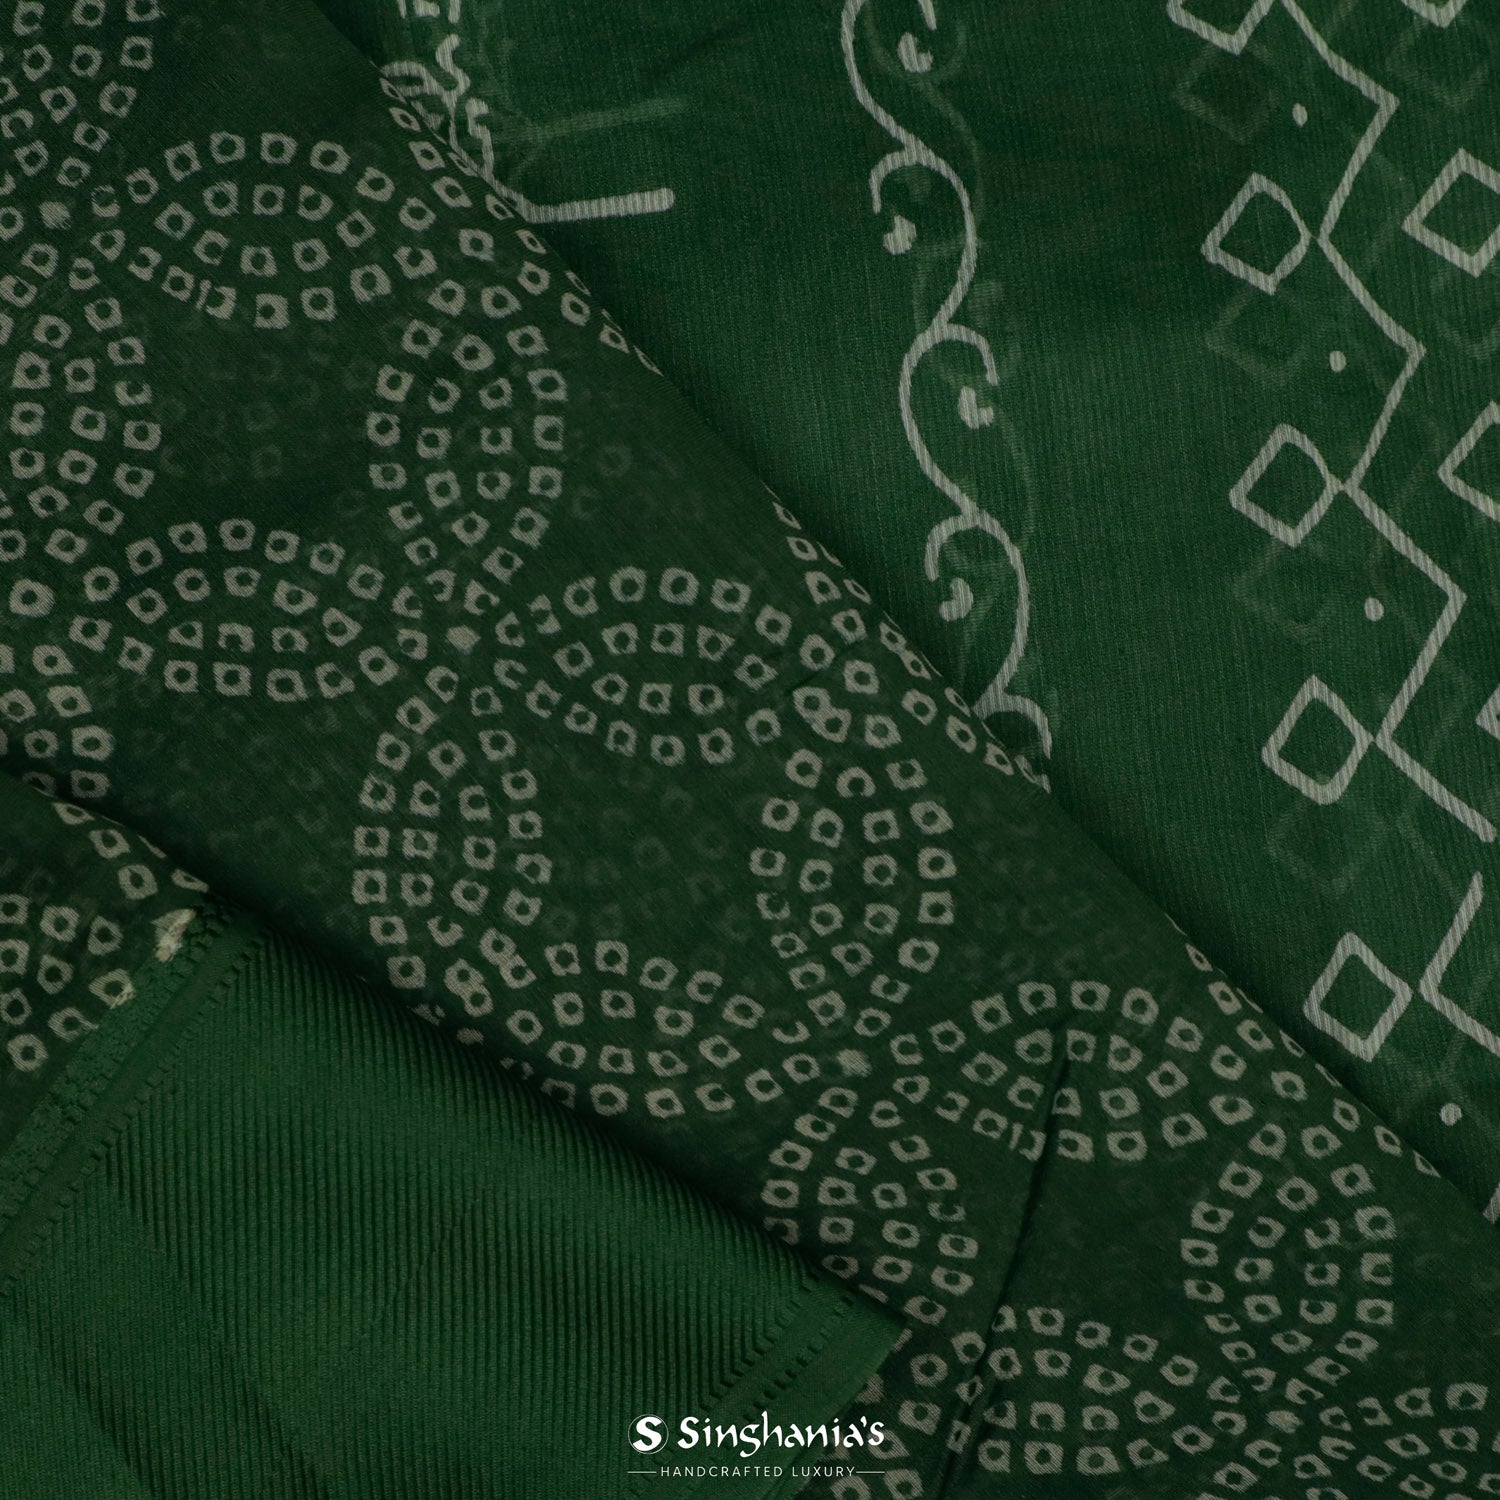 Hunter Green Printed Chanderi Saree With Bandhani-Inspired Pattern